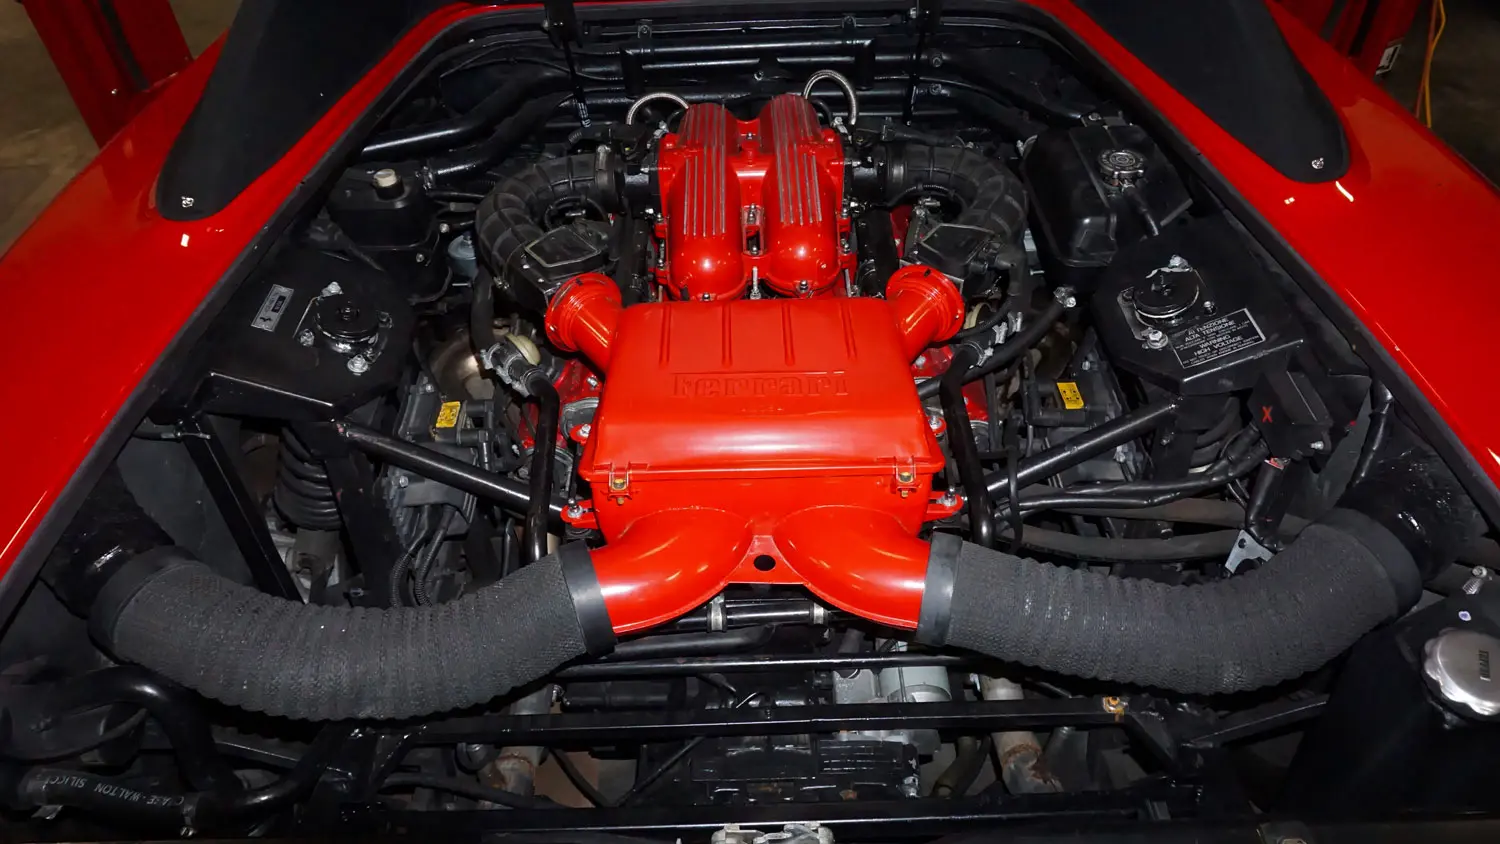 ferrari 348 engine - How much horsepower does a Ferrari 348 TB have